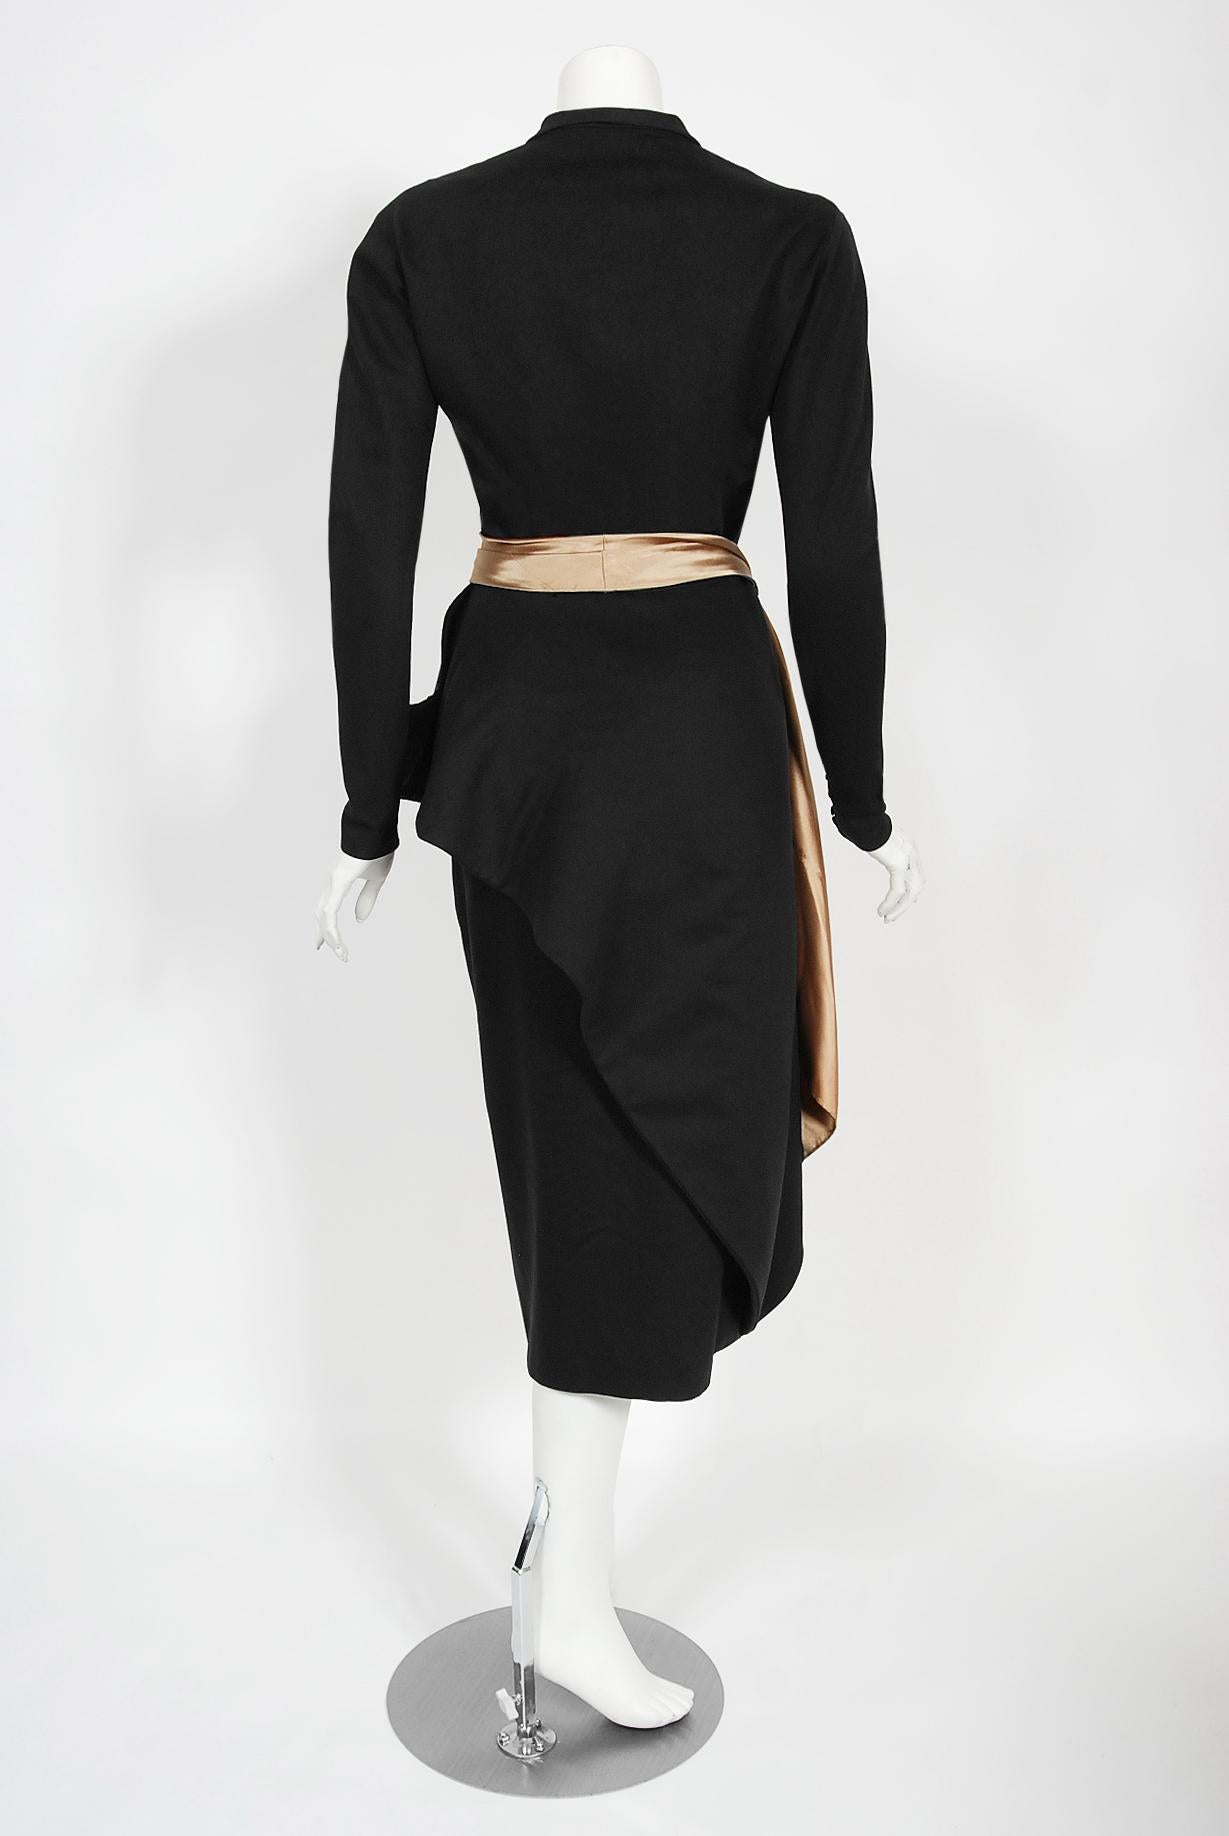 Vintage 1949 Lanvin Haute Couture Documented Sculpted Black Wool Cocktail Dress 9